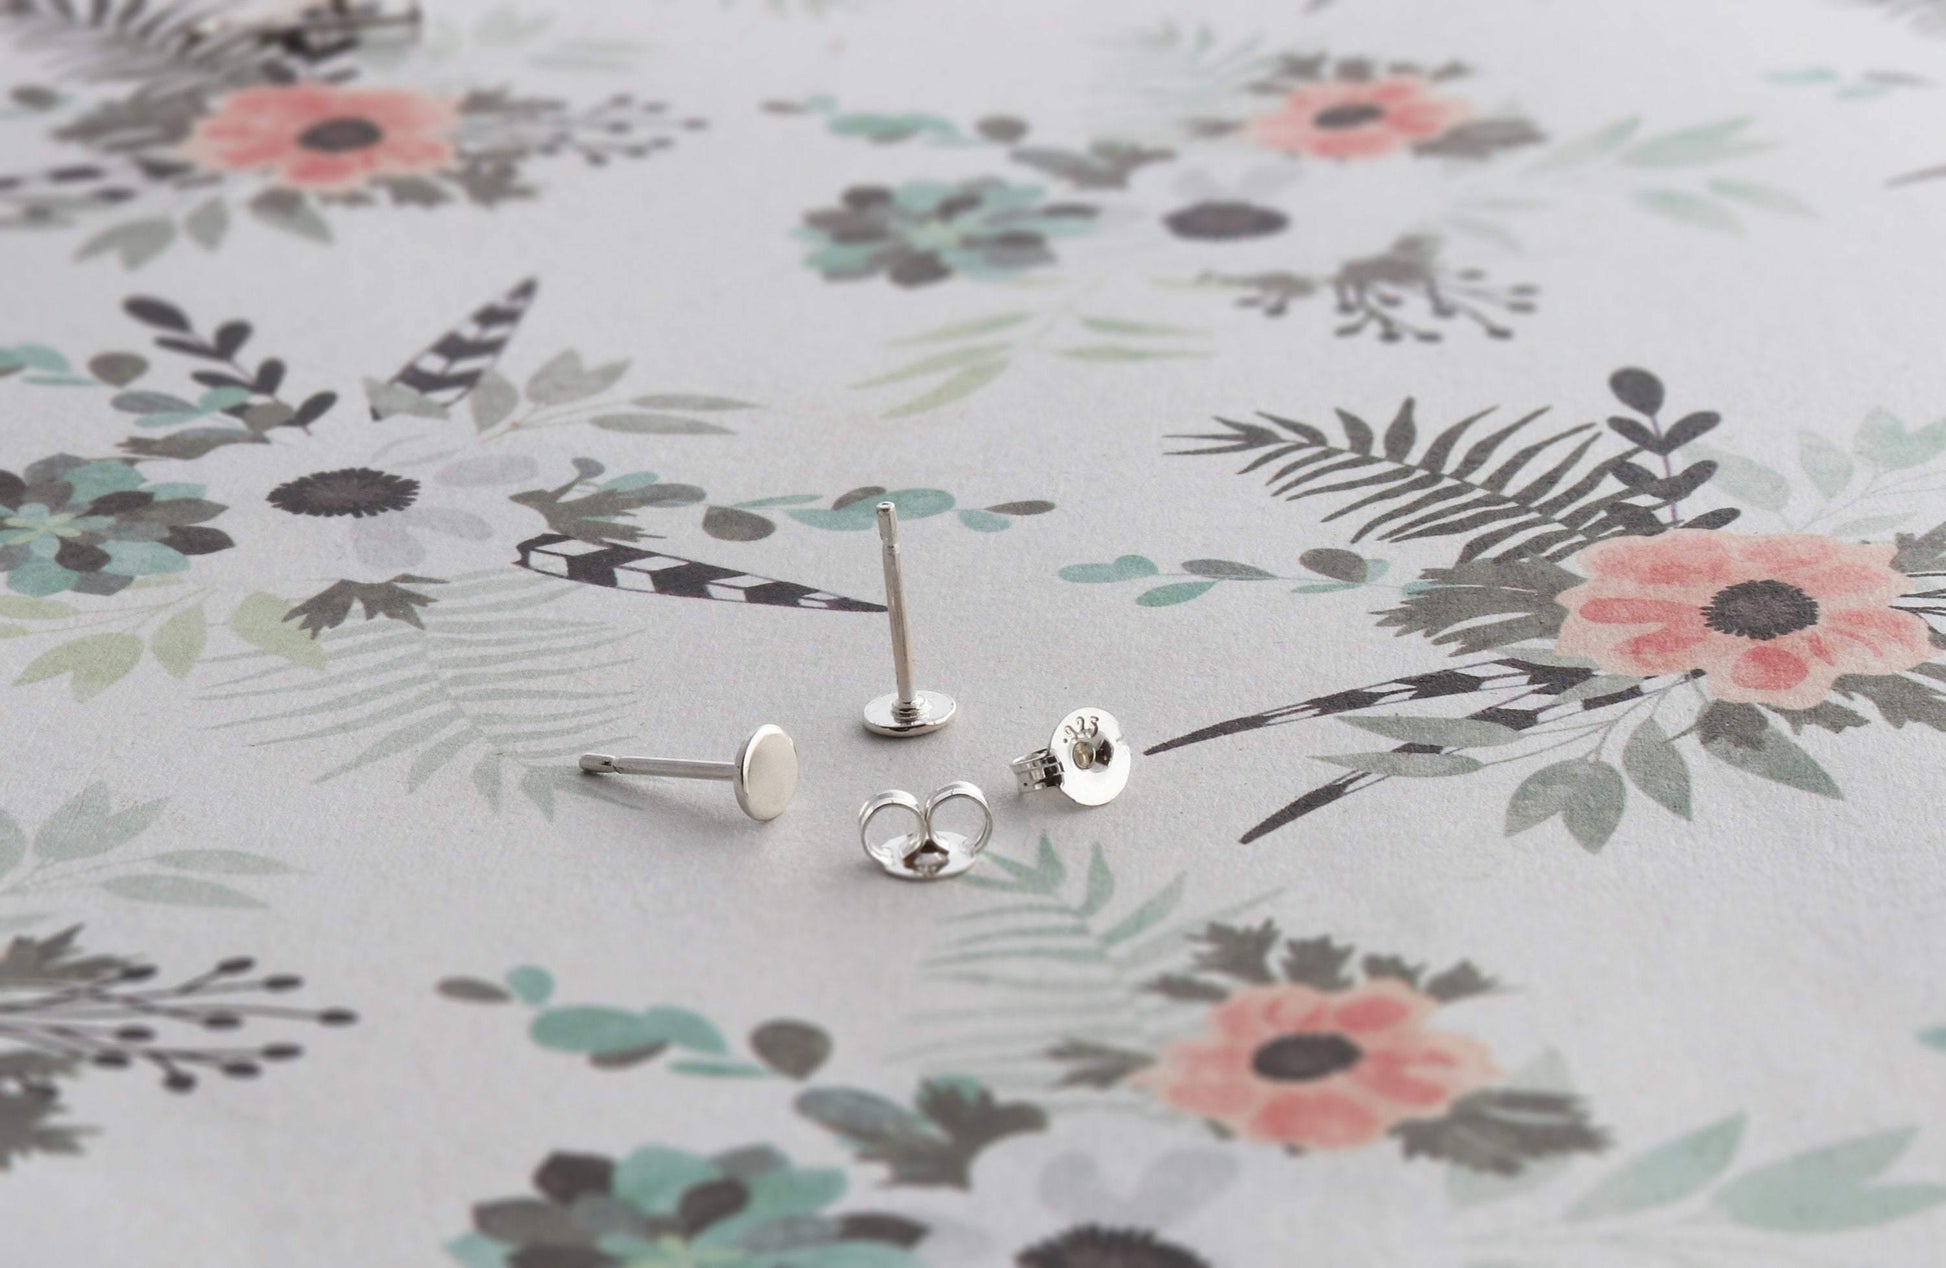 5 mm Small Sterling Silver Disk Earrings, Minimalist Studs, Silver Stud Earrings, Geometric Modern Jewelry, Simple Silver Studs, Handmade - Sweet November Jewelry